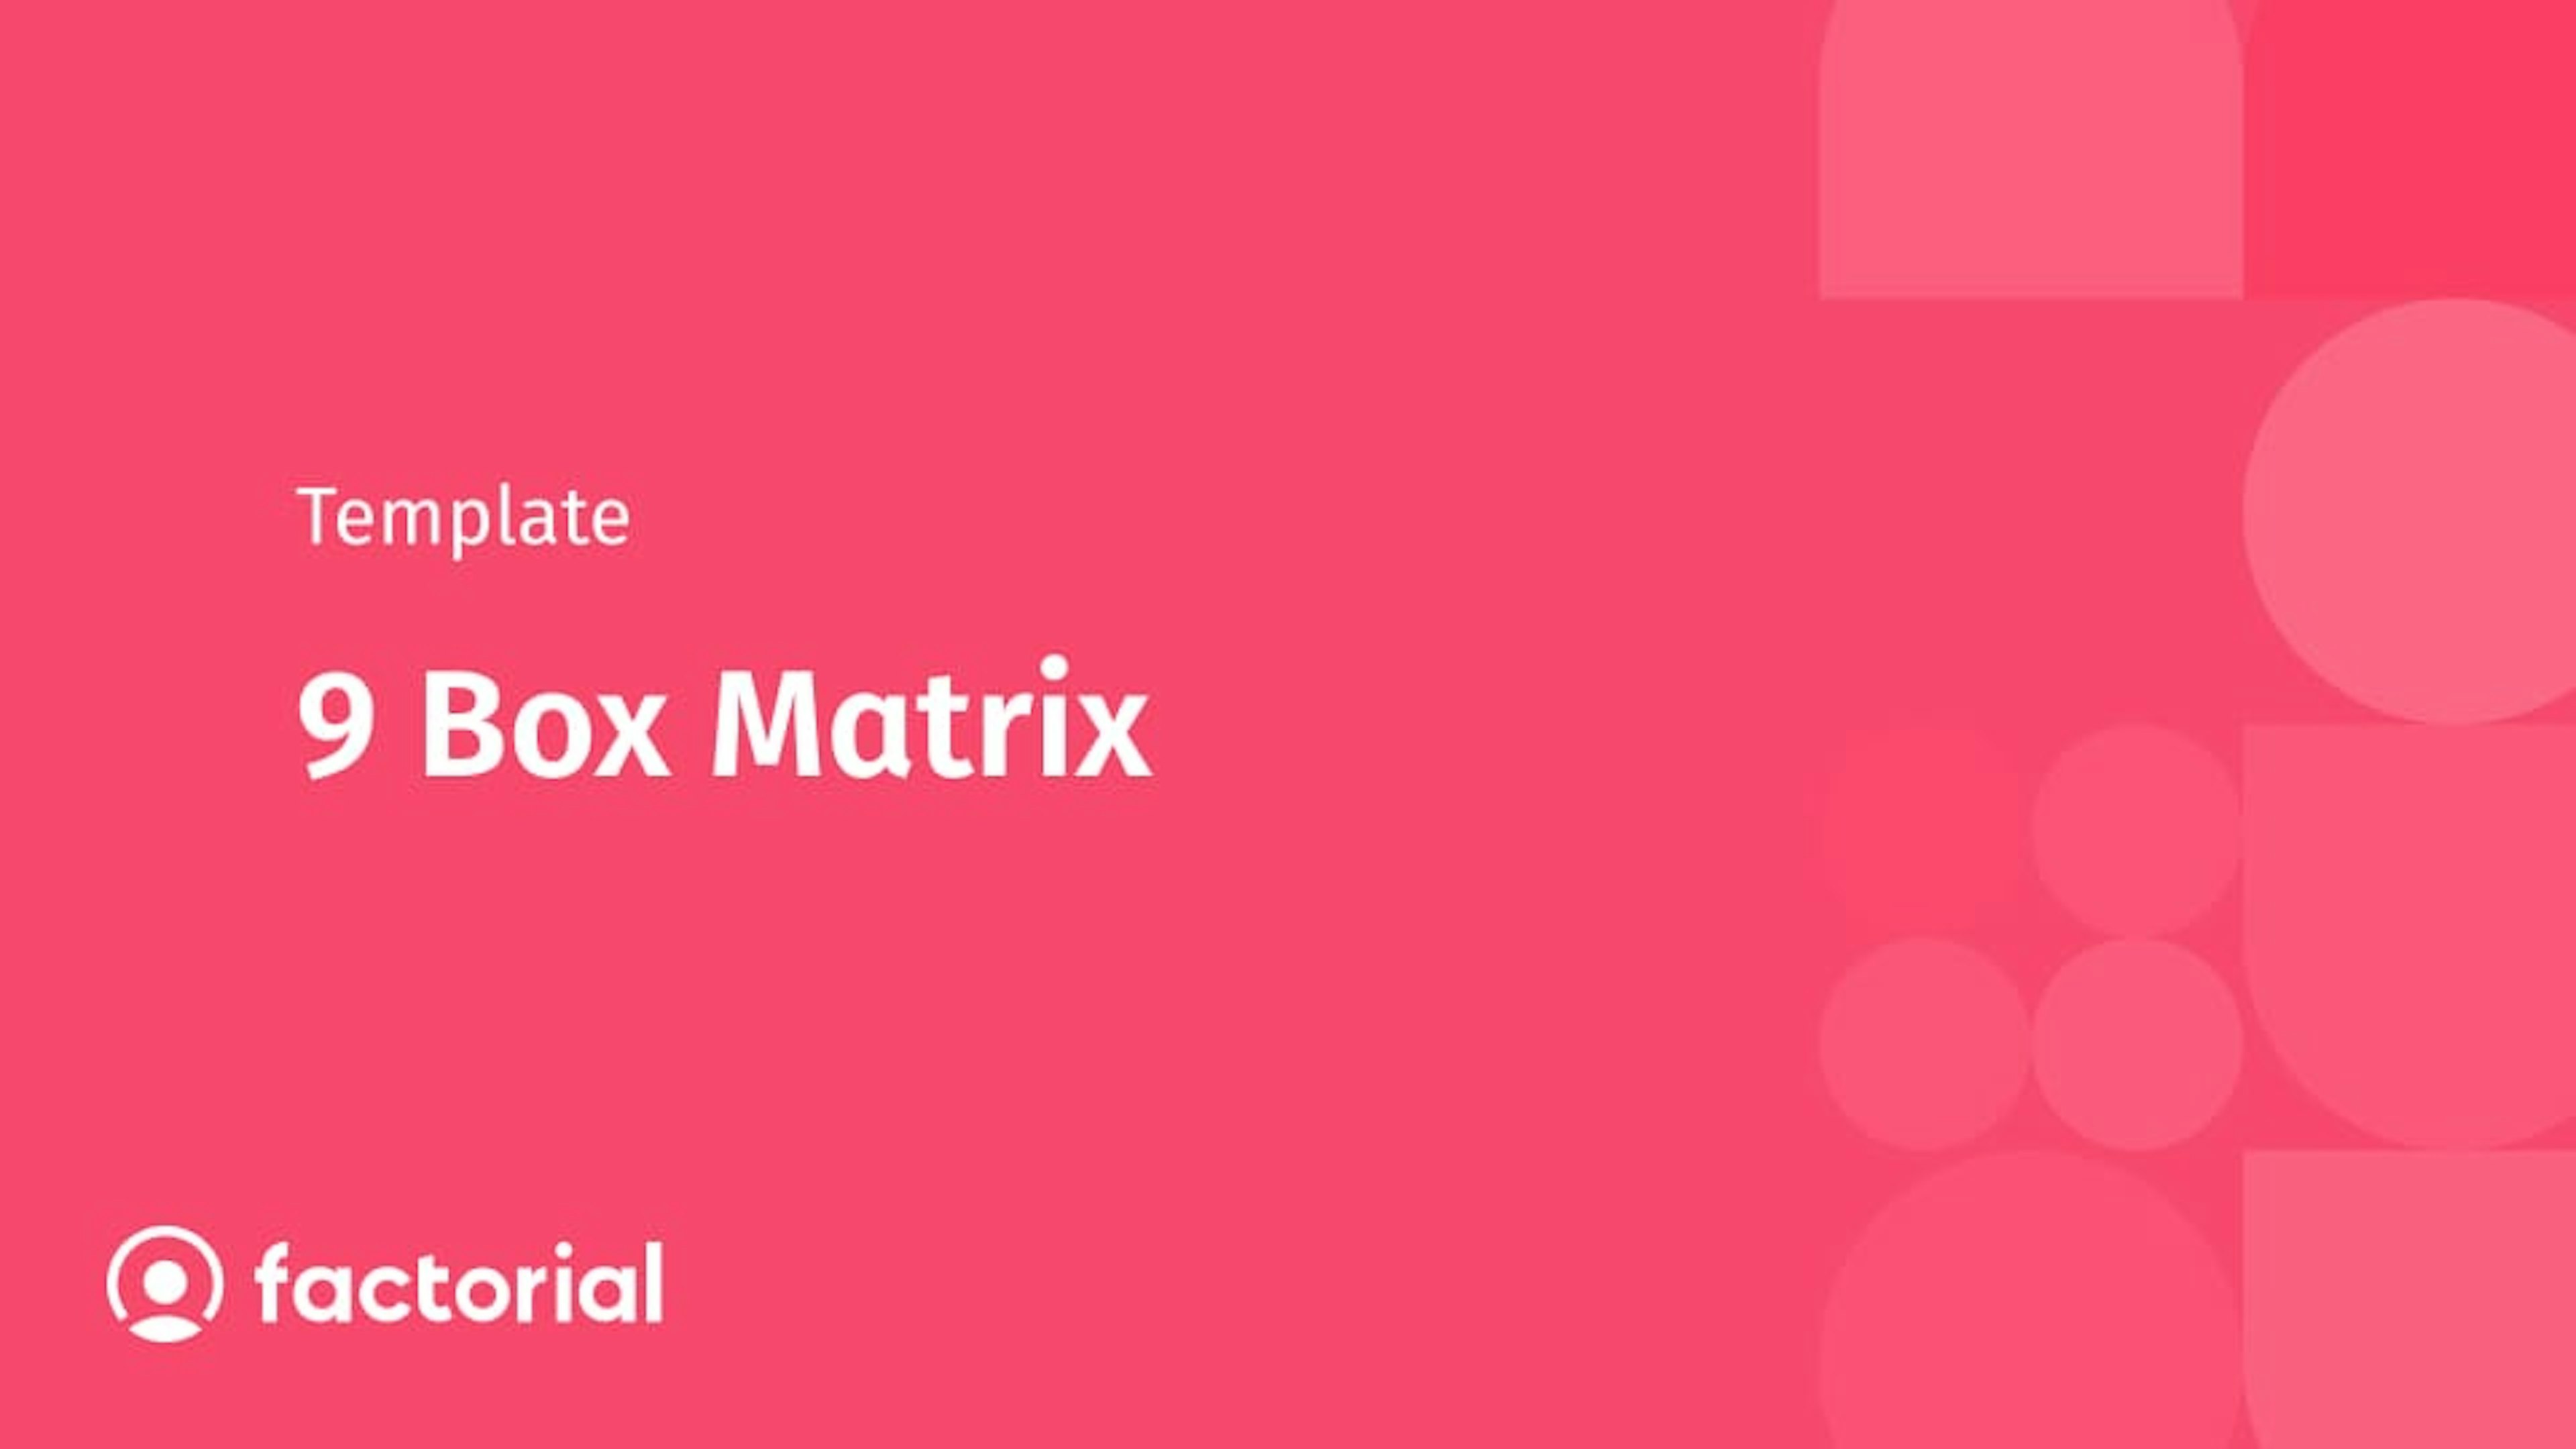 9 Box Matrix